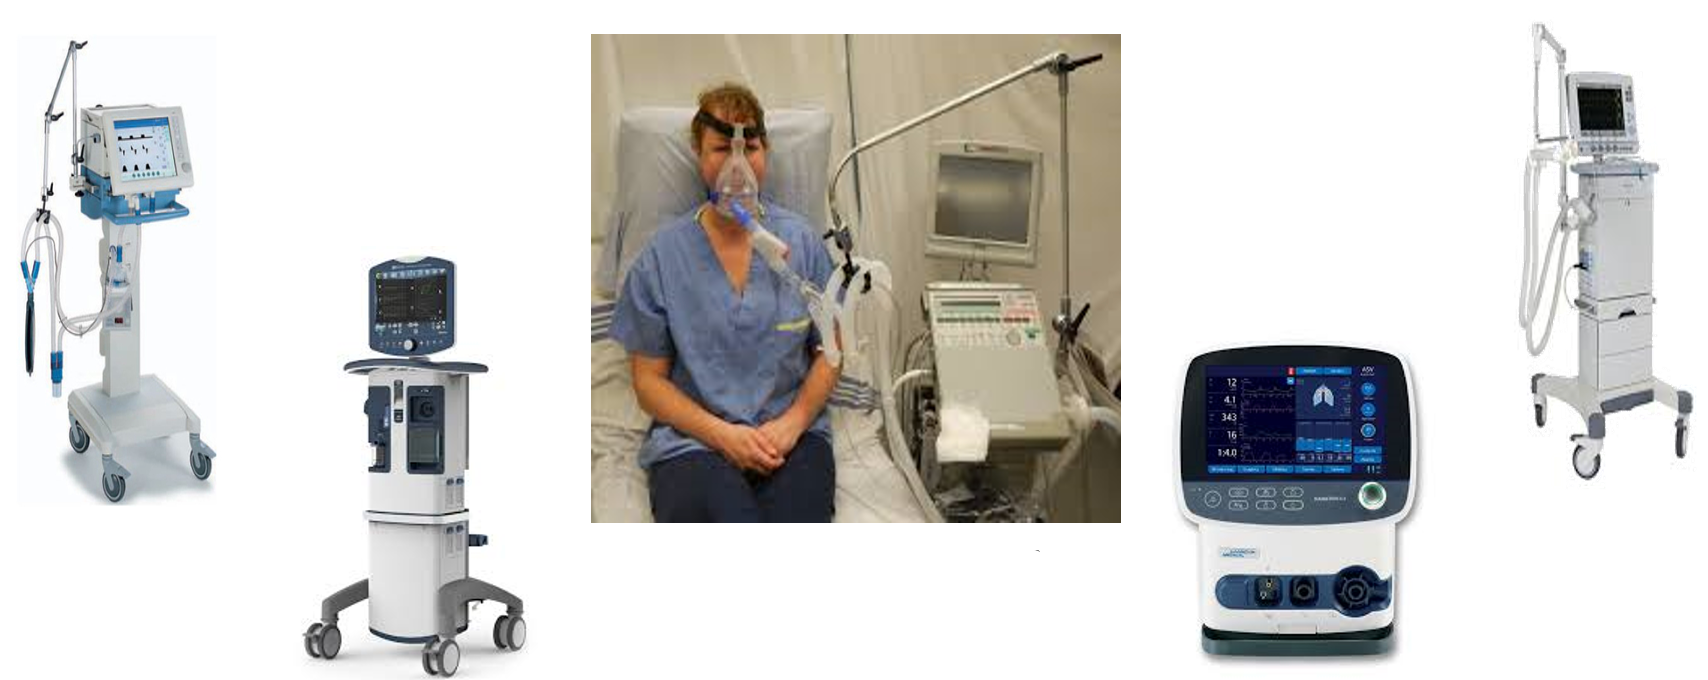 Examples of invasive ventilators